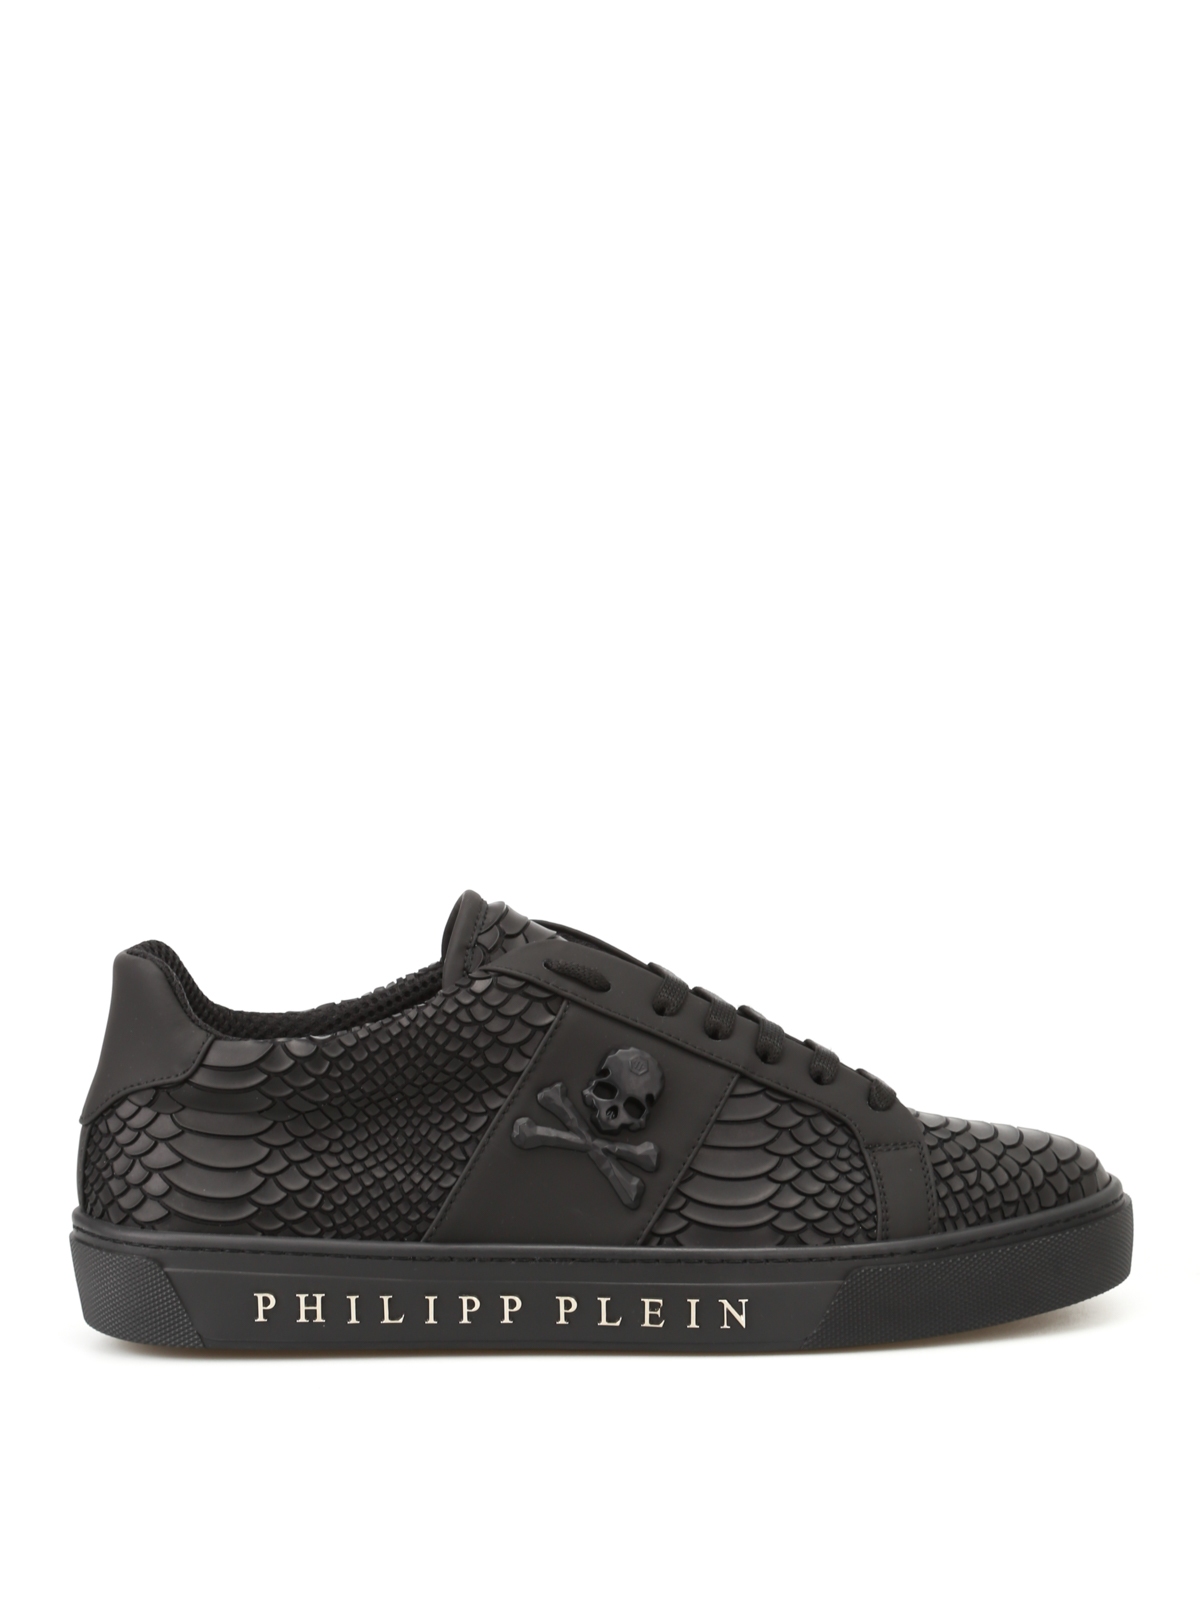 philipp plein shoes